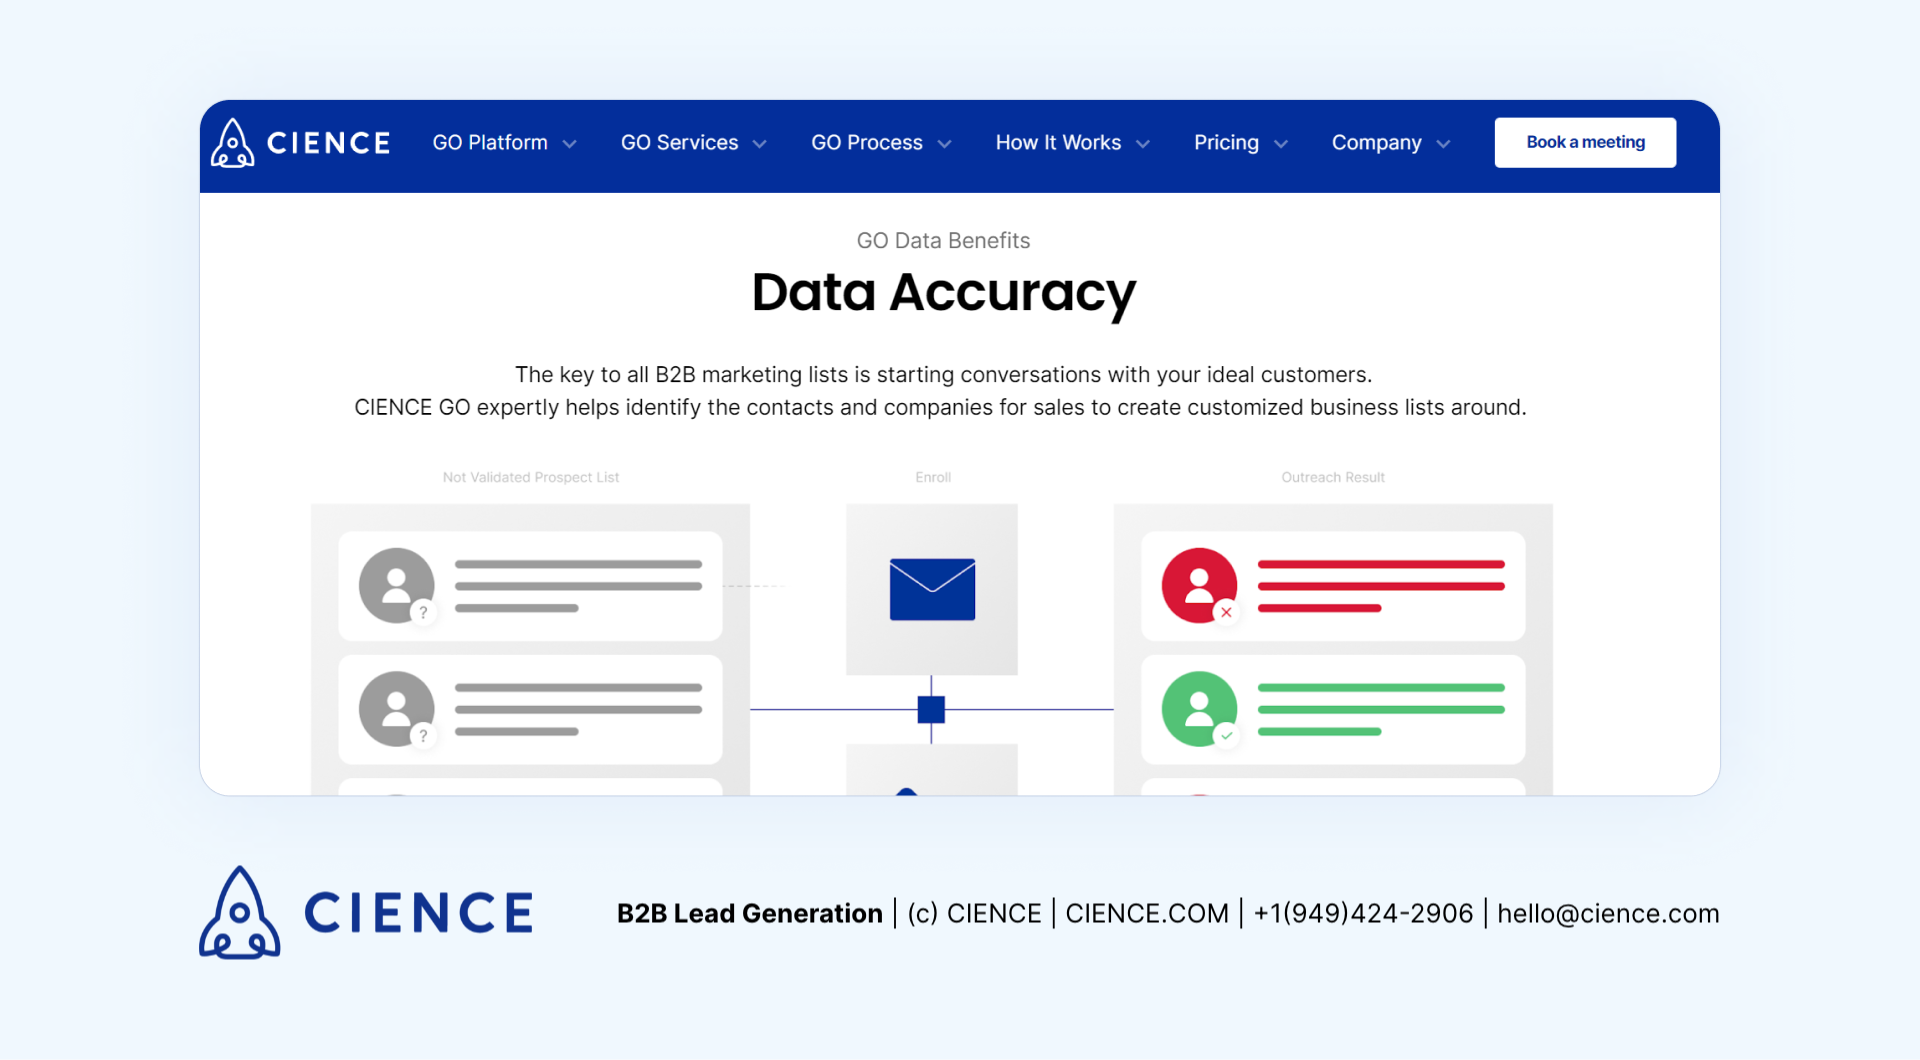 Customer Data Platform - CIENCE GO Data